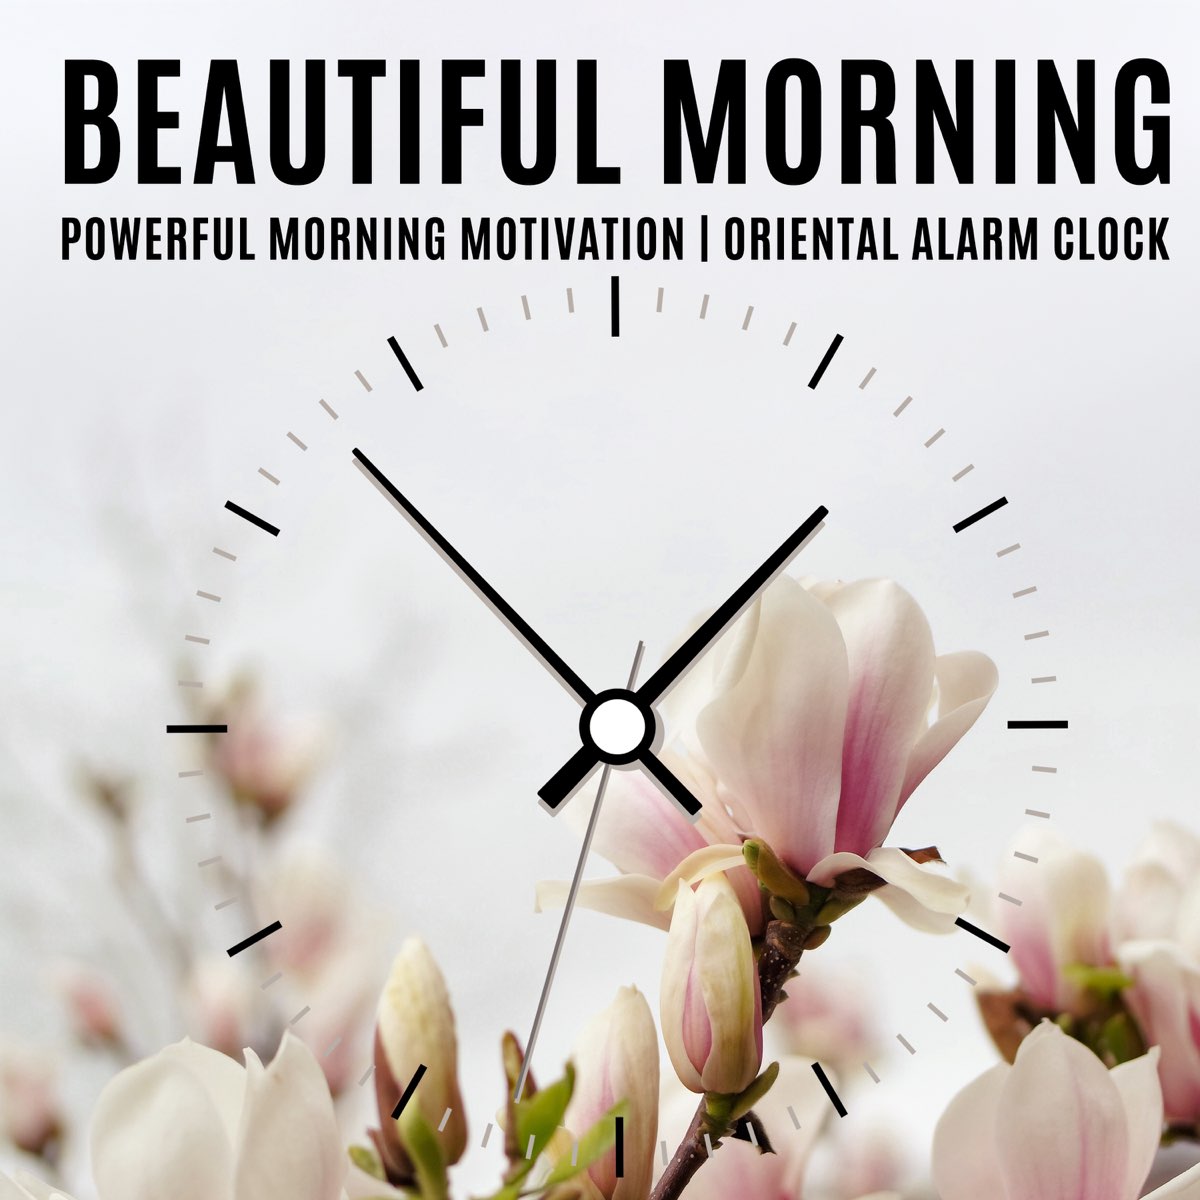 Beautiful Morning: Powerful Morning Motivation, Oriental Alarm Clock,  Positive Emotions, Natural Awakening by Oriental Music Zone on Apple Music